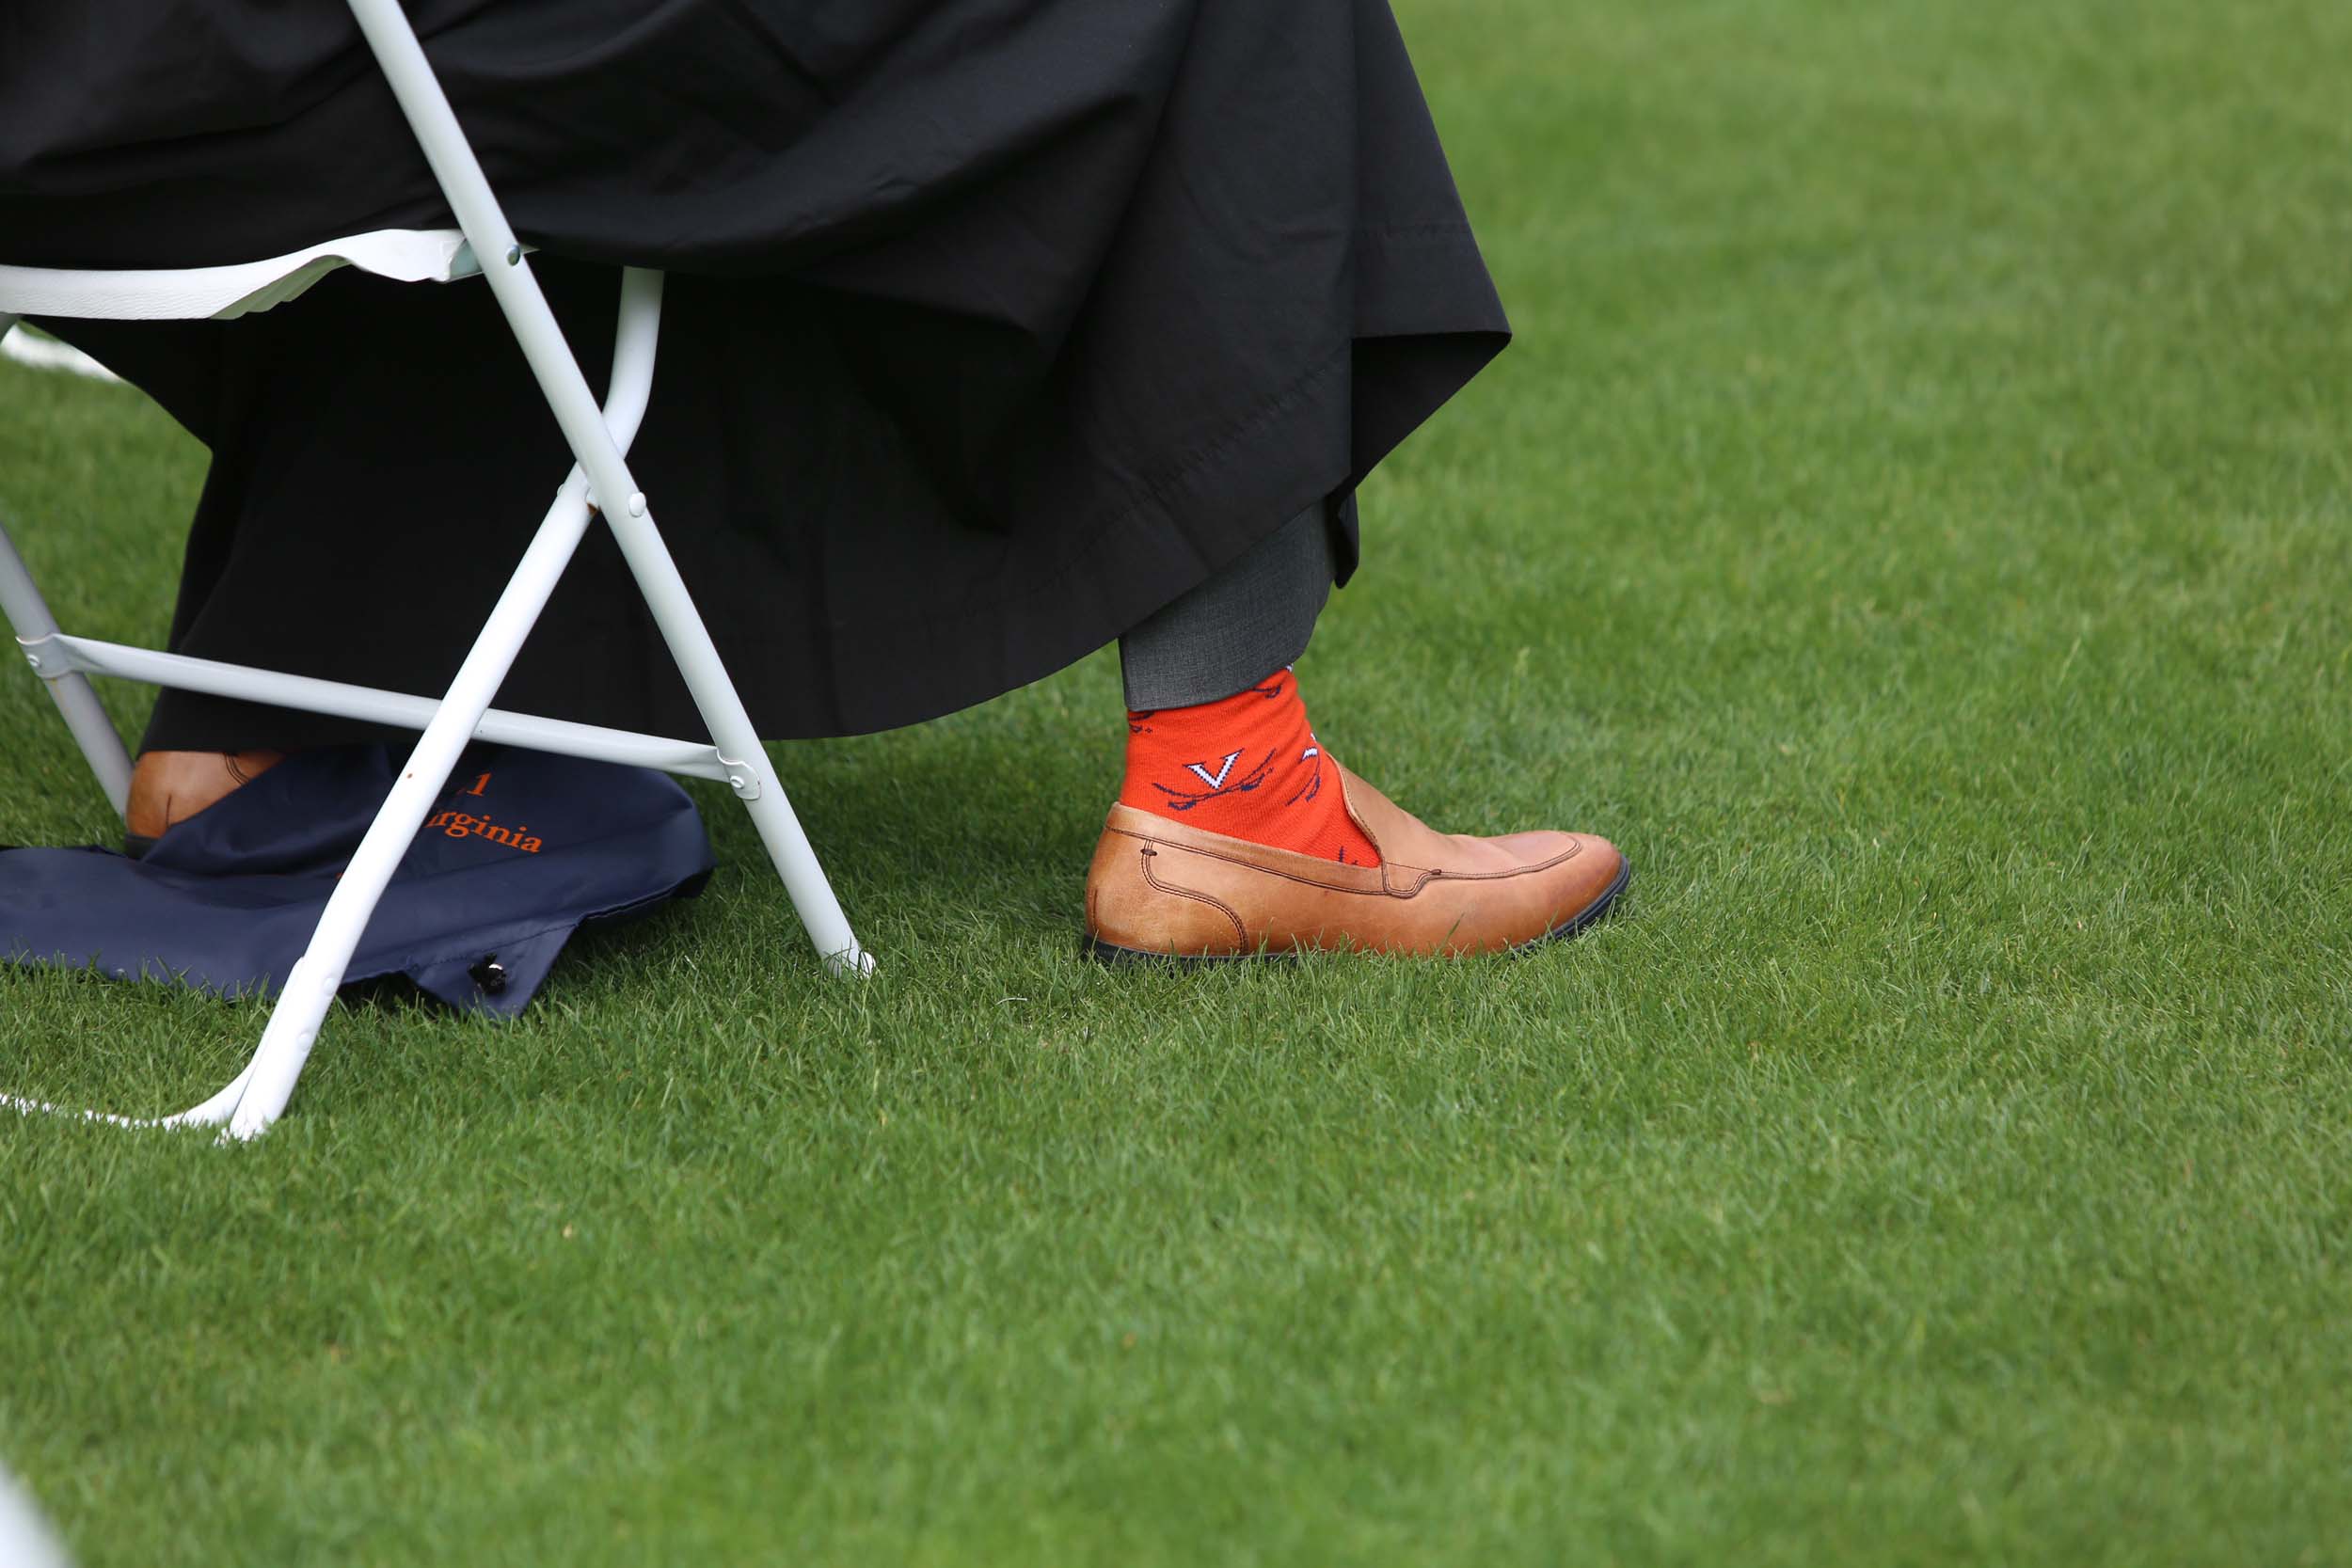 Graduate wearing orange UVA socks